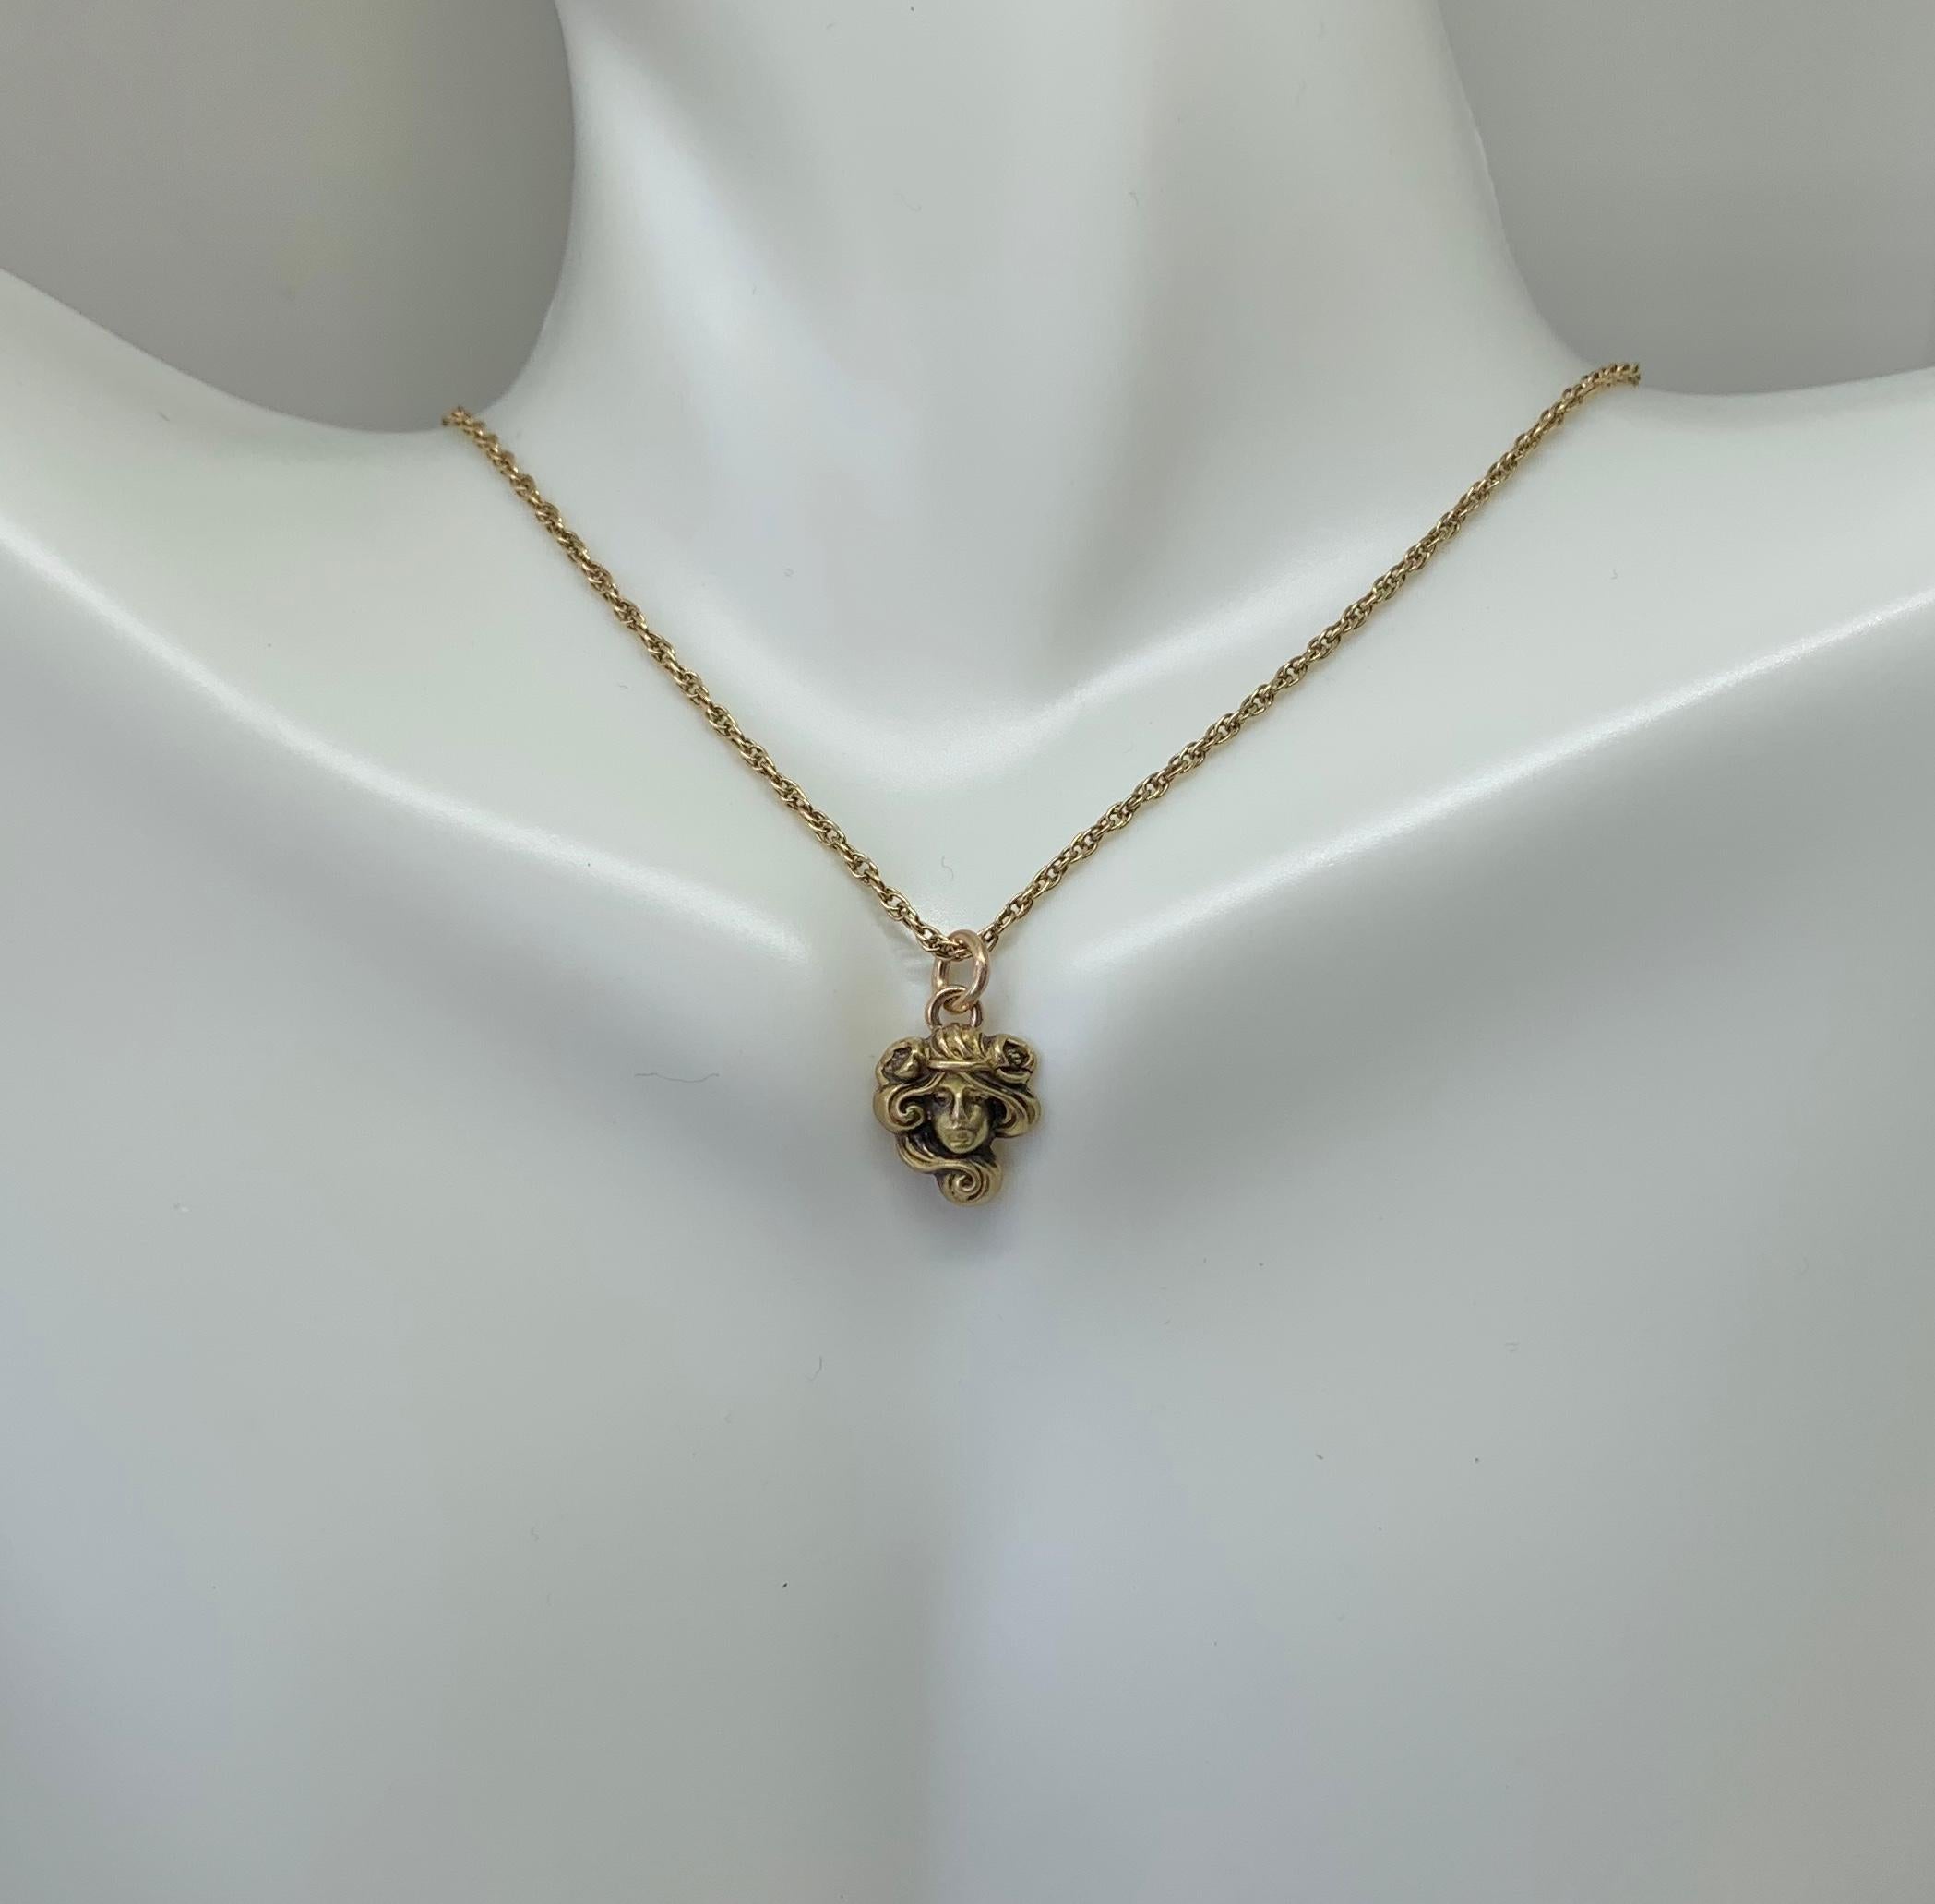 Art Nouveau Woman Goddess Flower Pendant Necklace by Link & Angell 14 Karat Gold For Sale 3